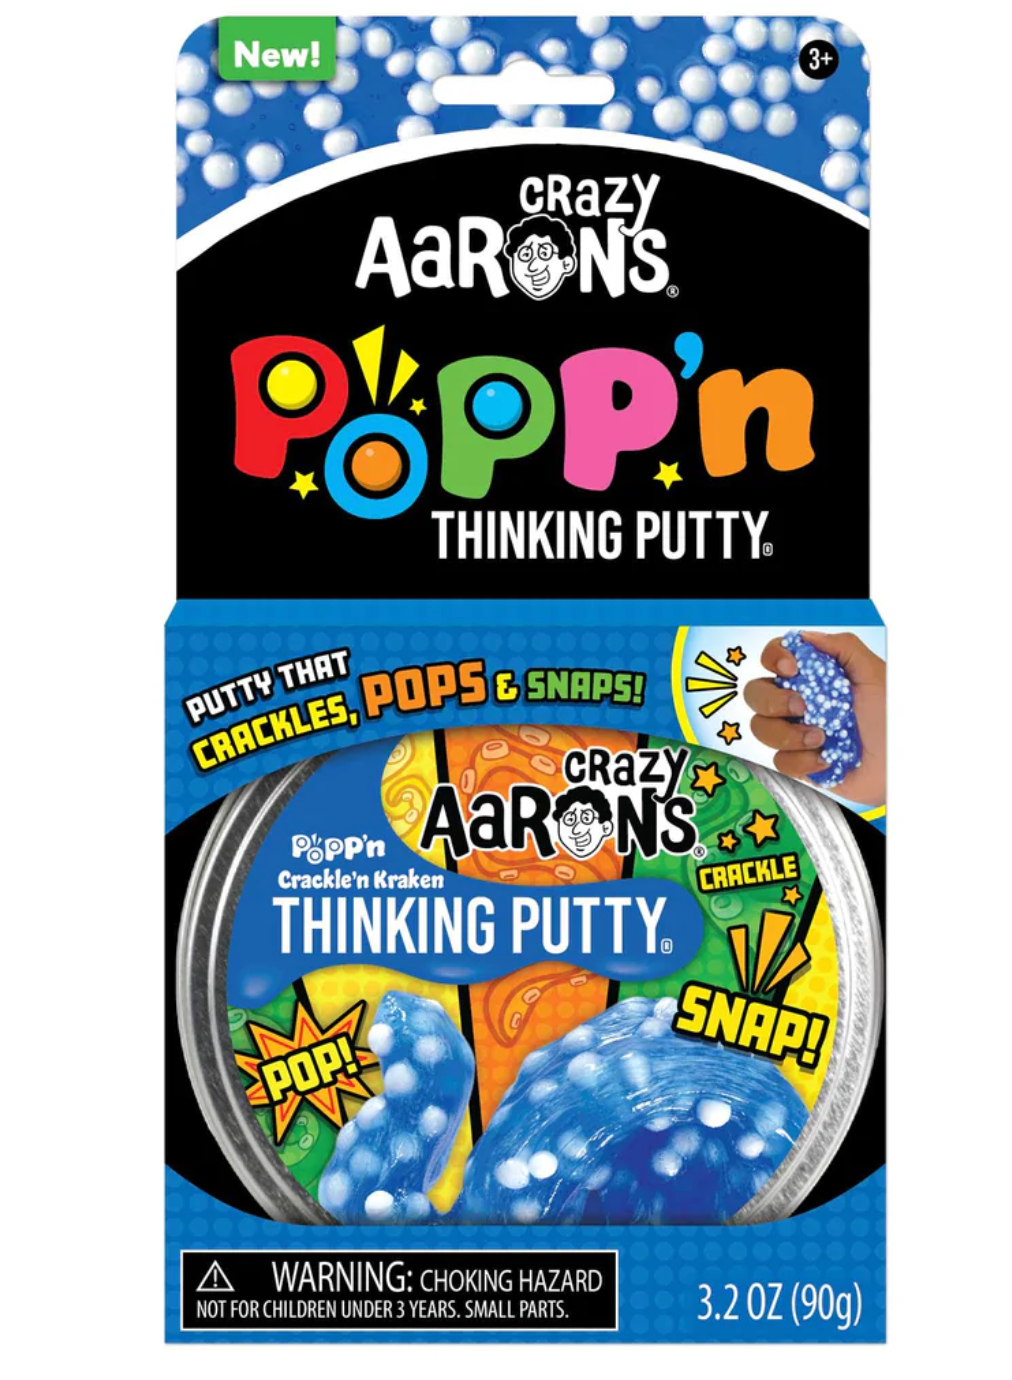 Crazy Aaron's Thinking Putty - Popp'n